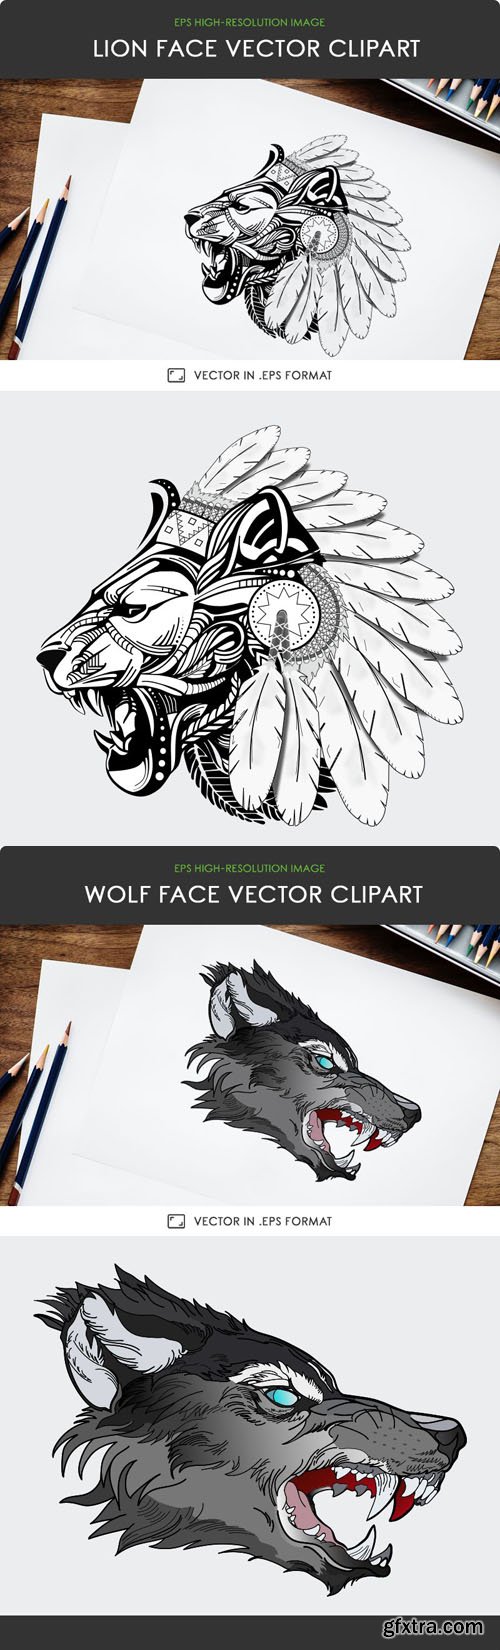 Lion & Wolf Face Vector Clipart